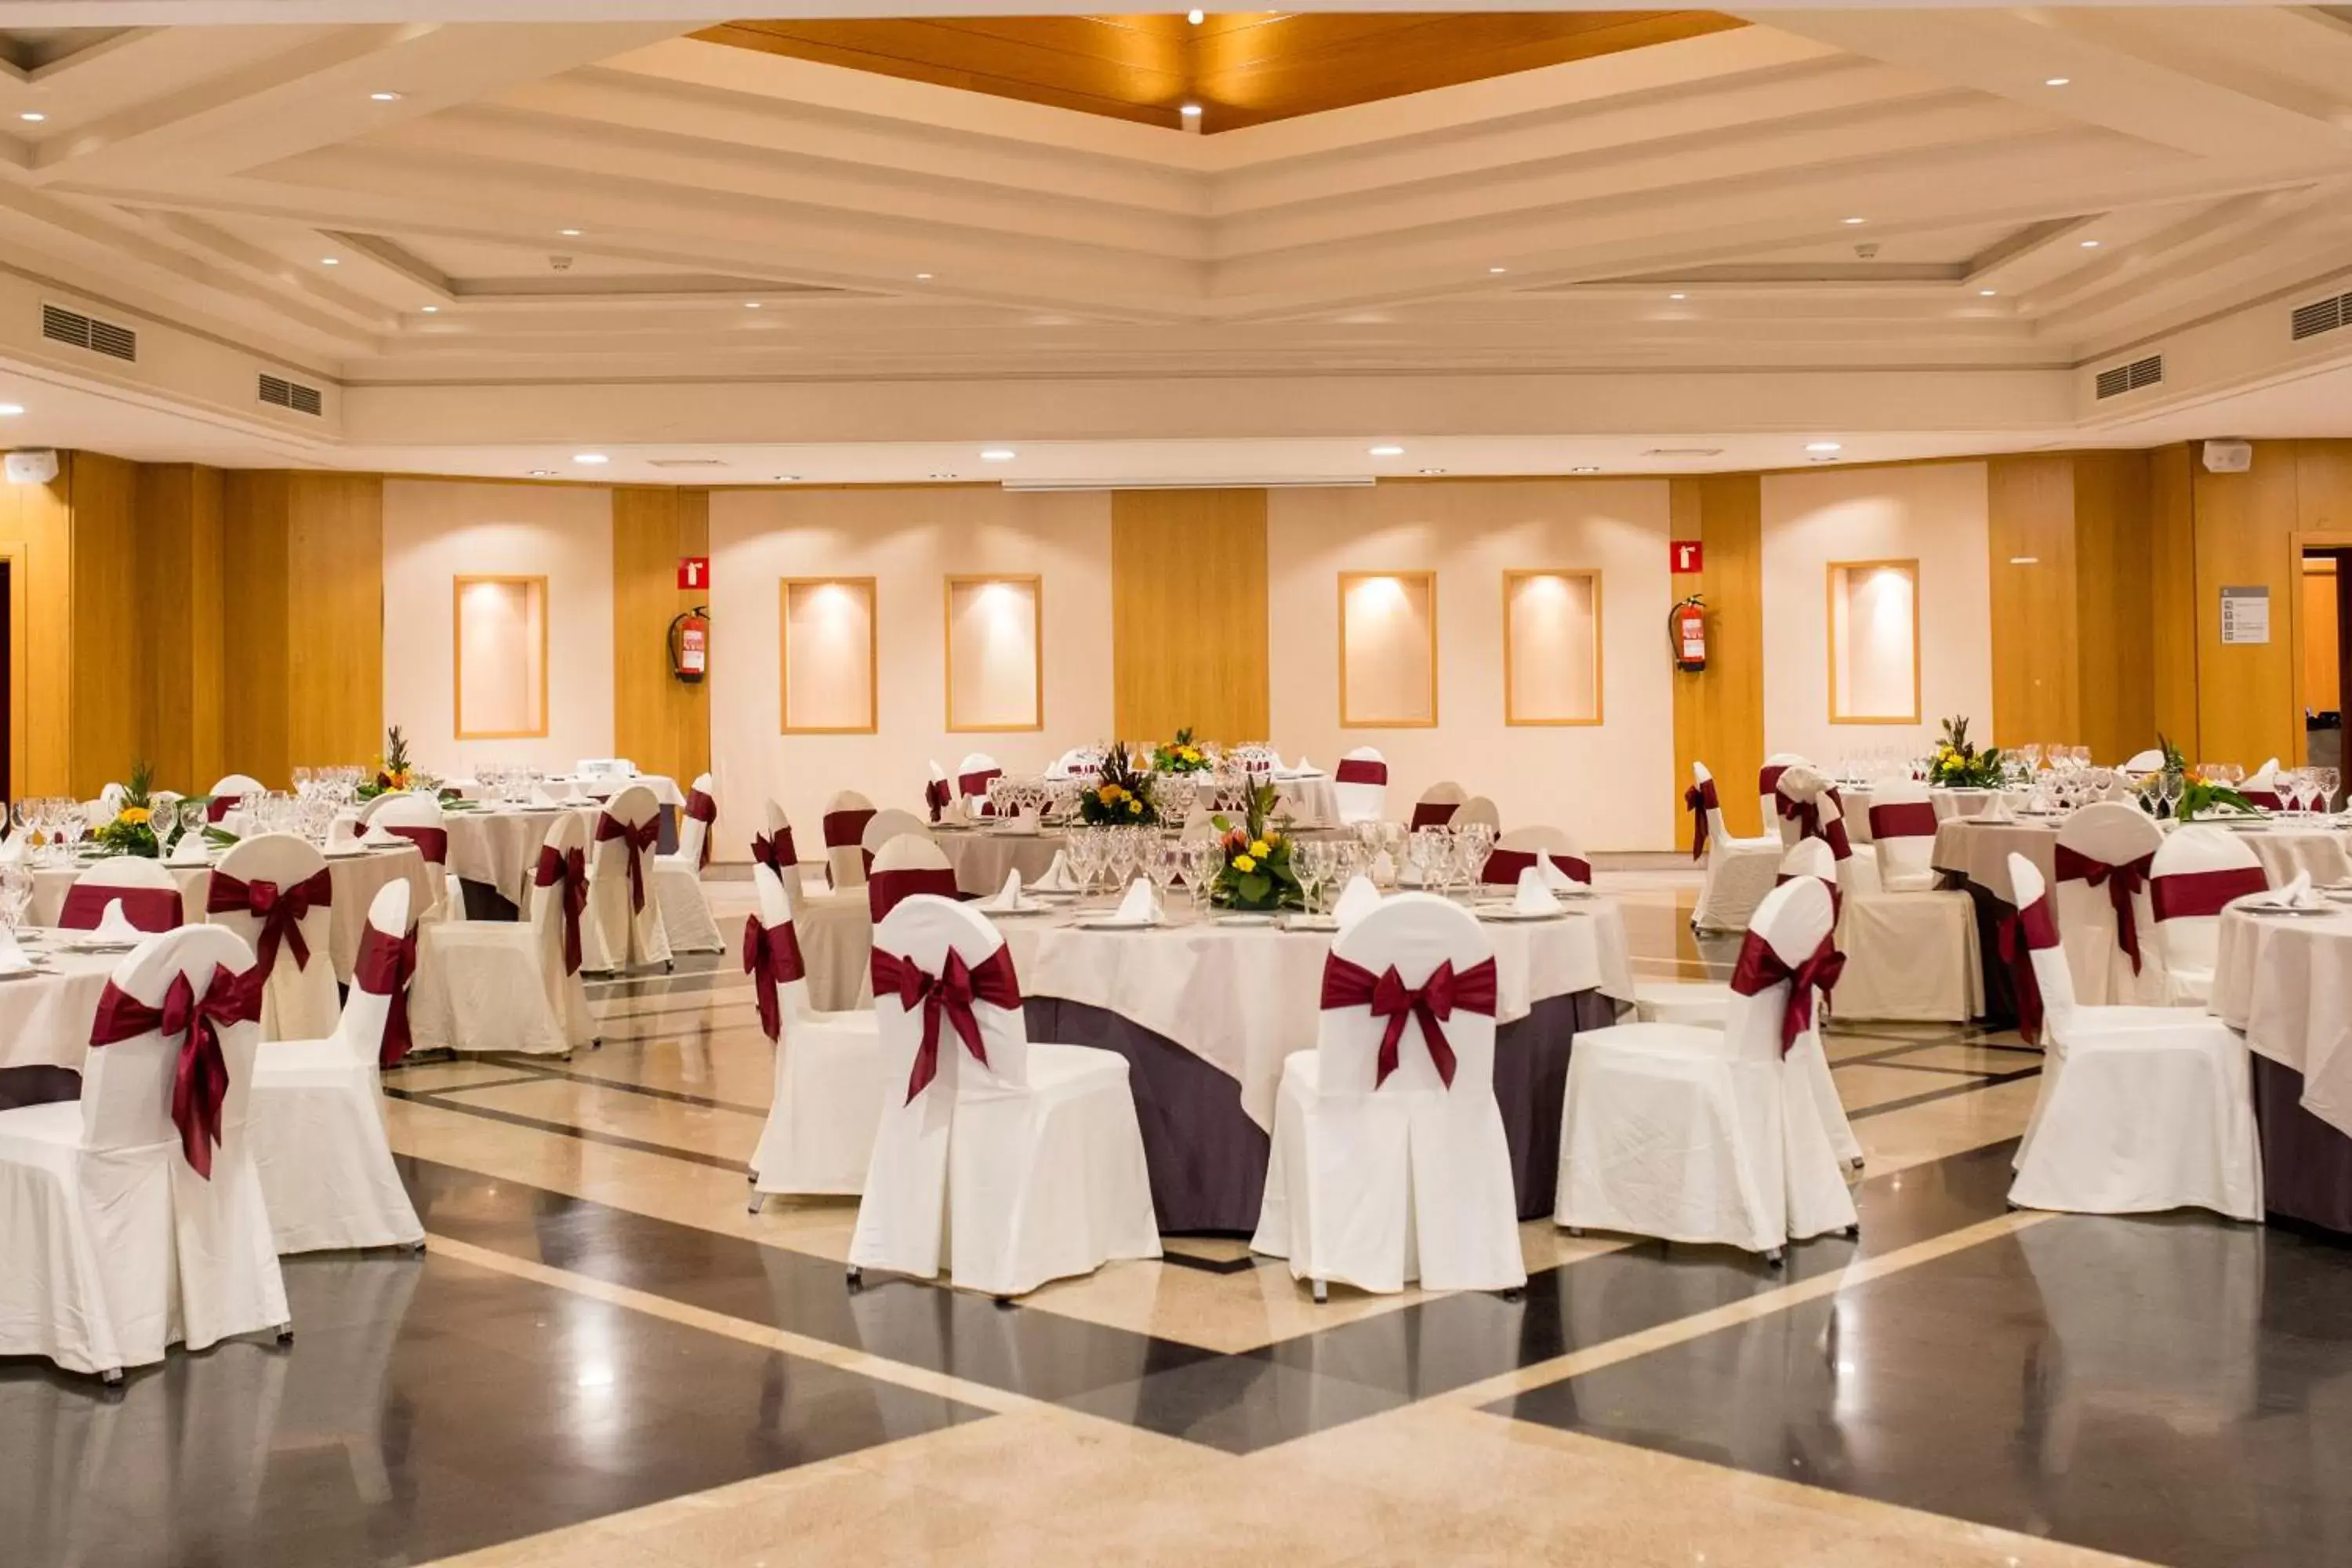 Banquet/Function facilities, Banquet Facilities in Exe Getafe